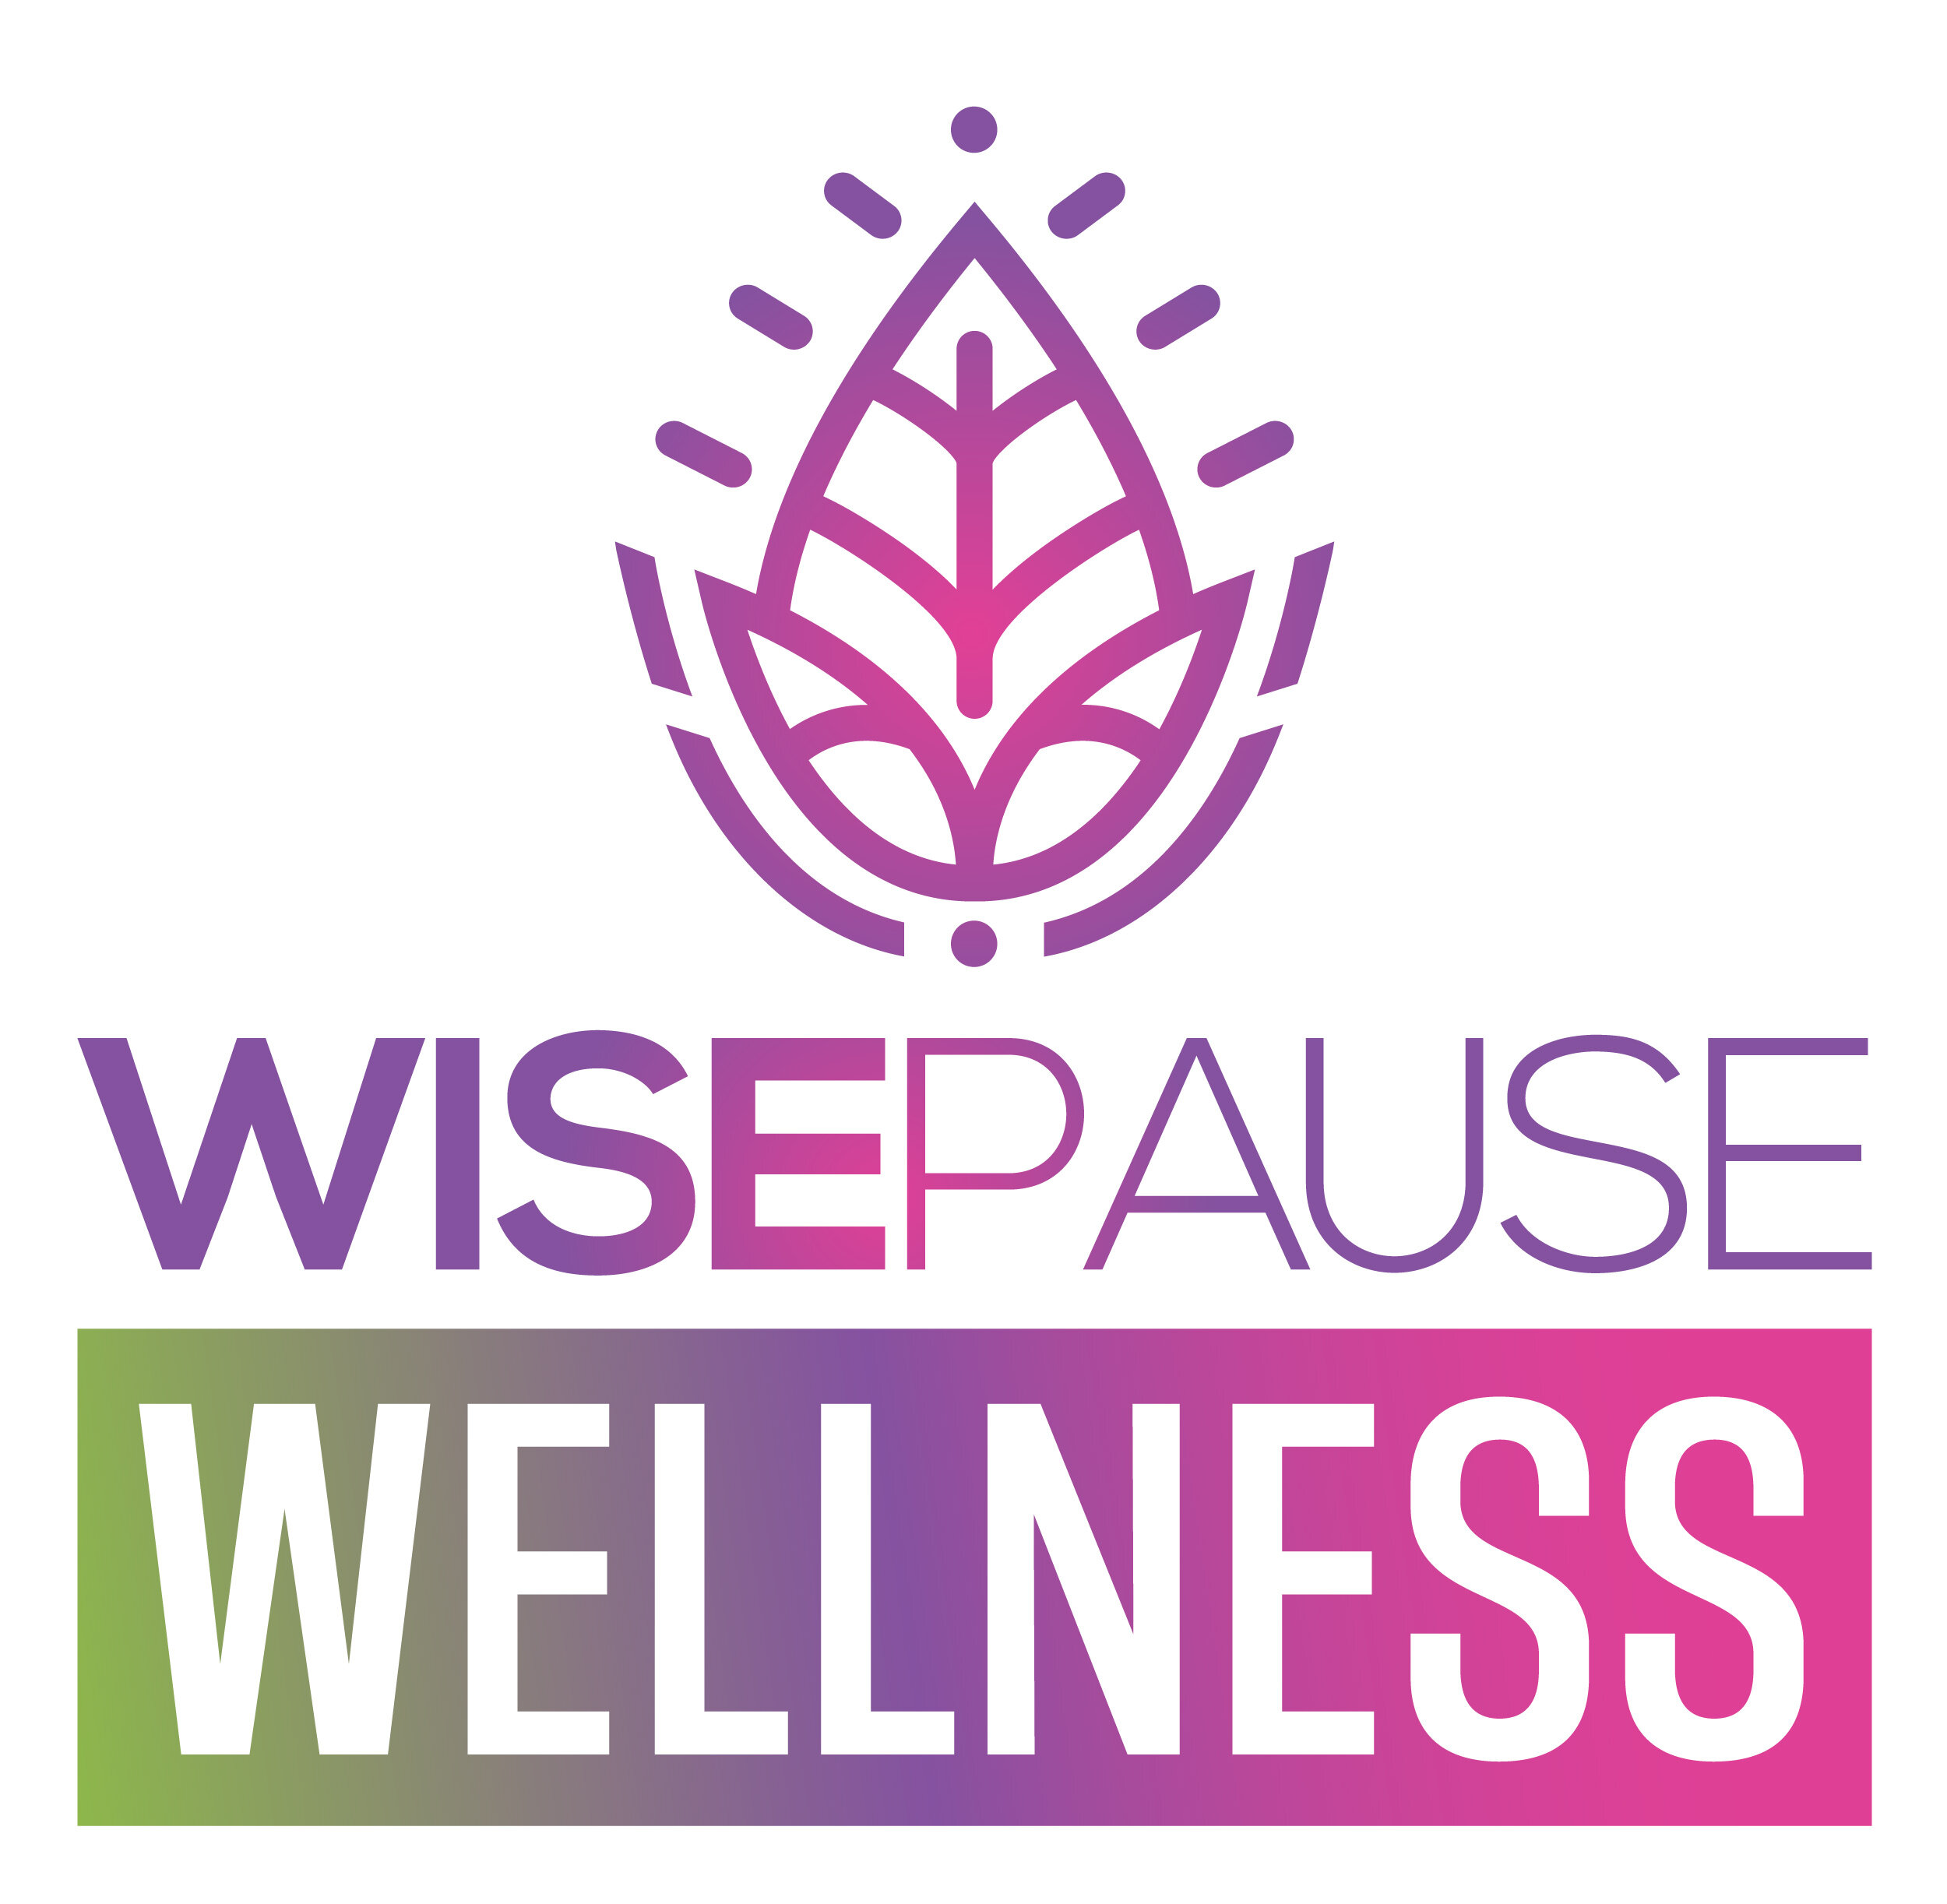 WisePause Wellness logo.jpg